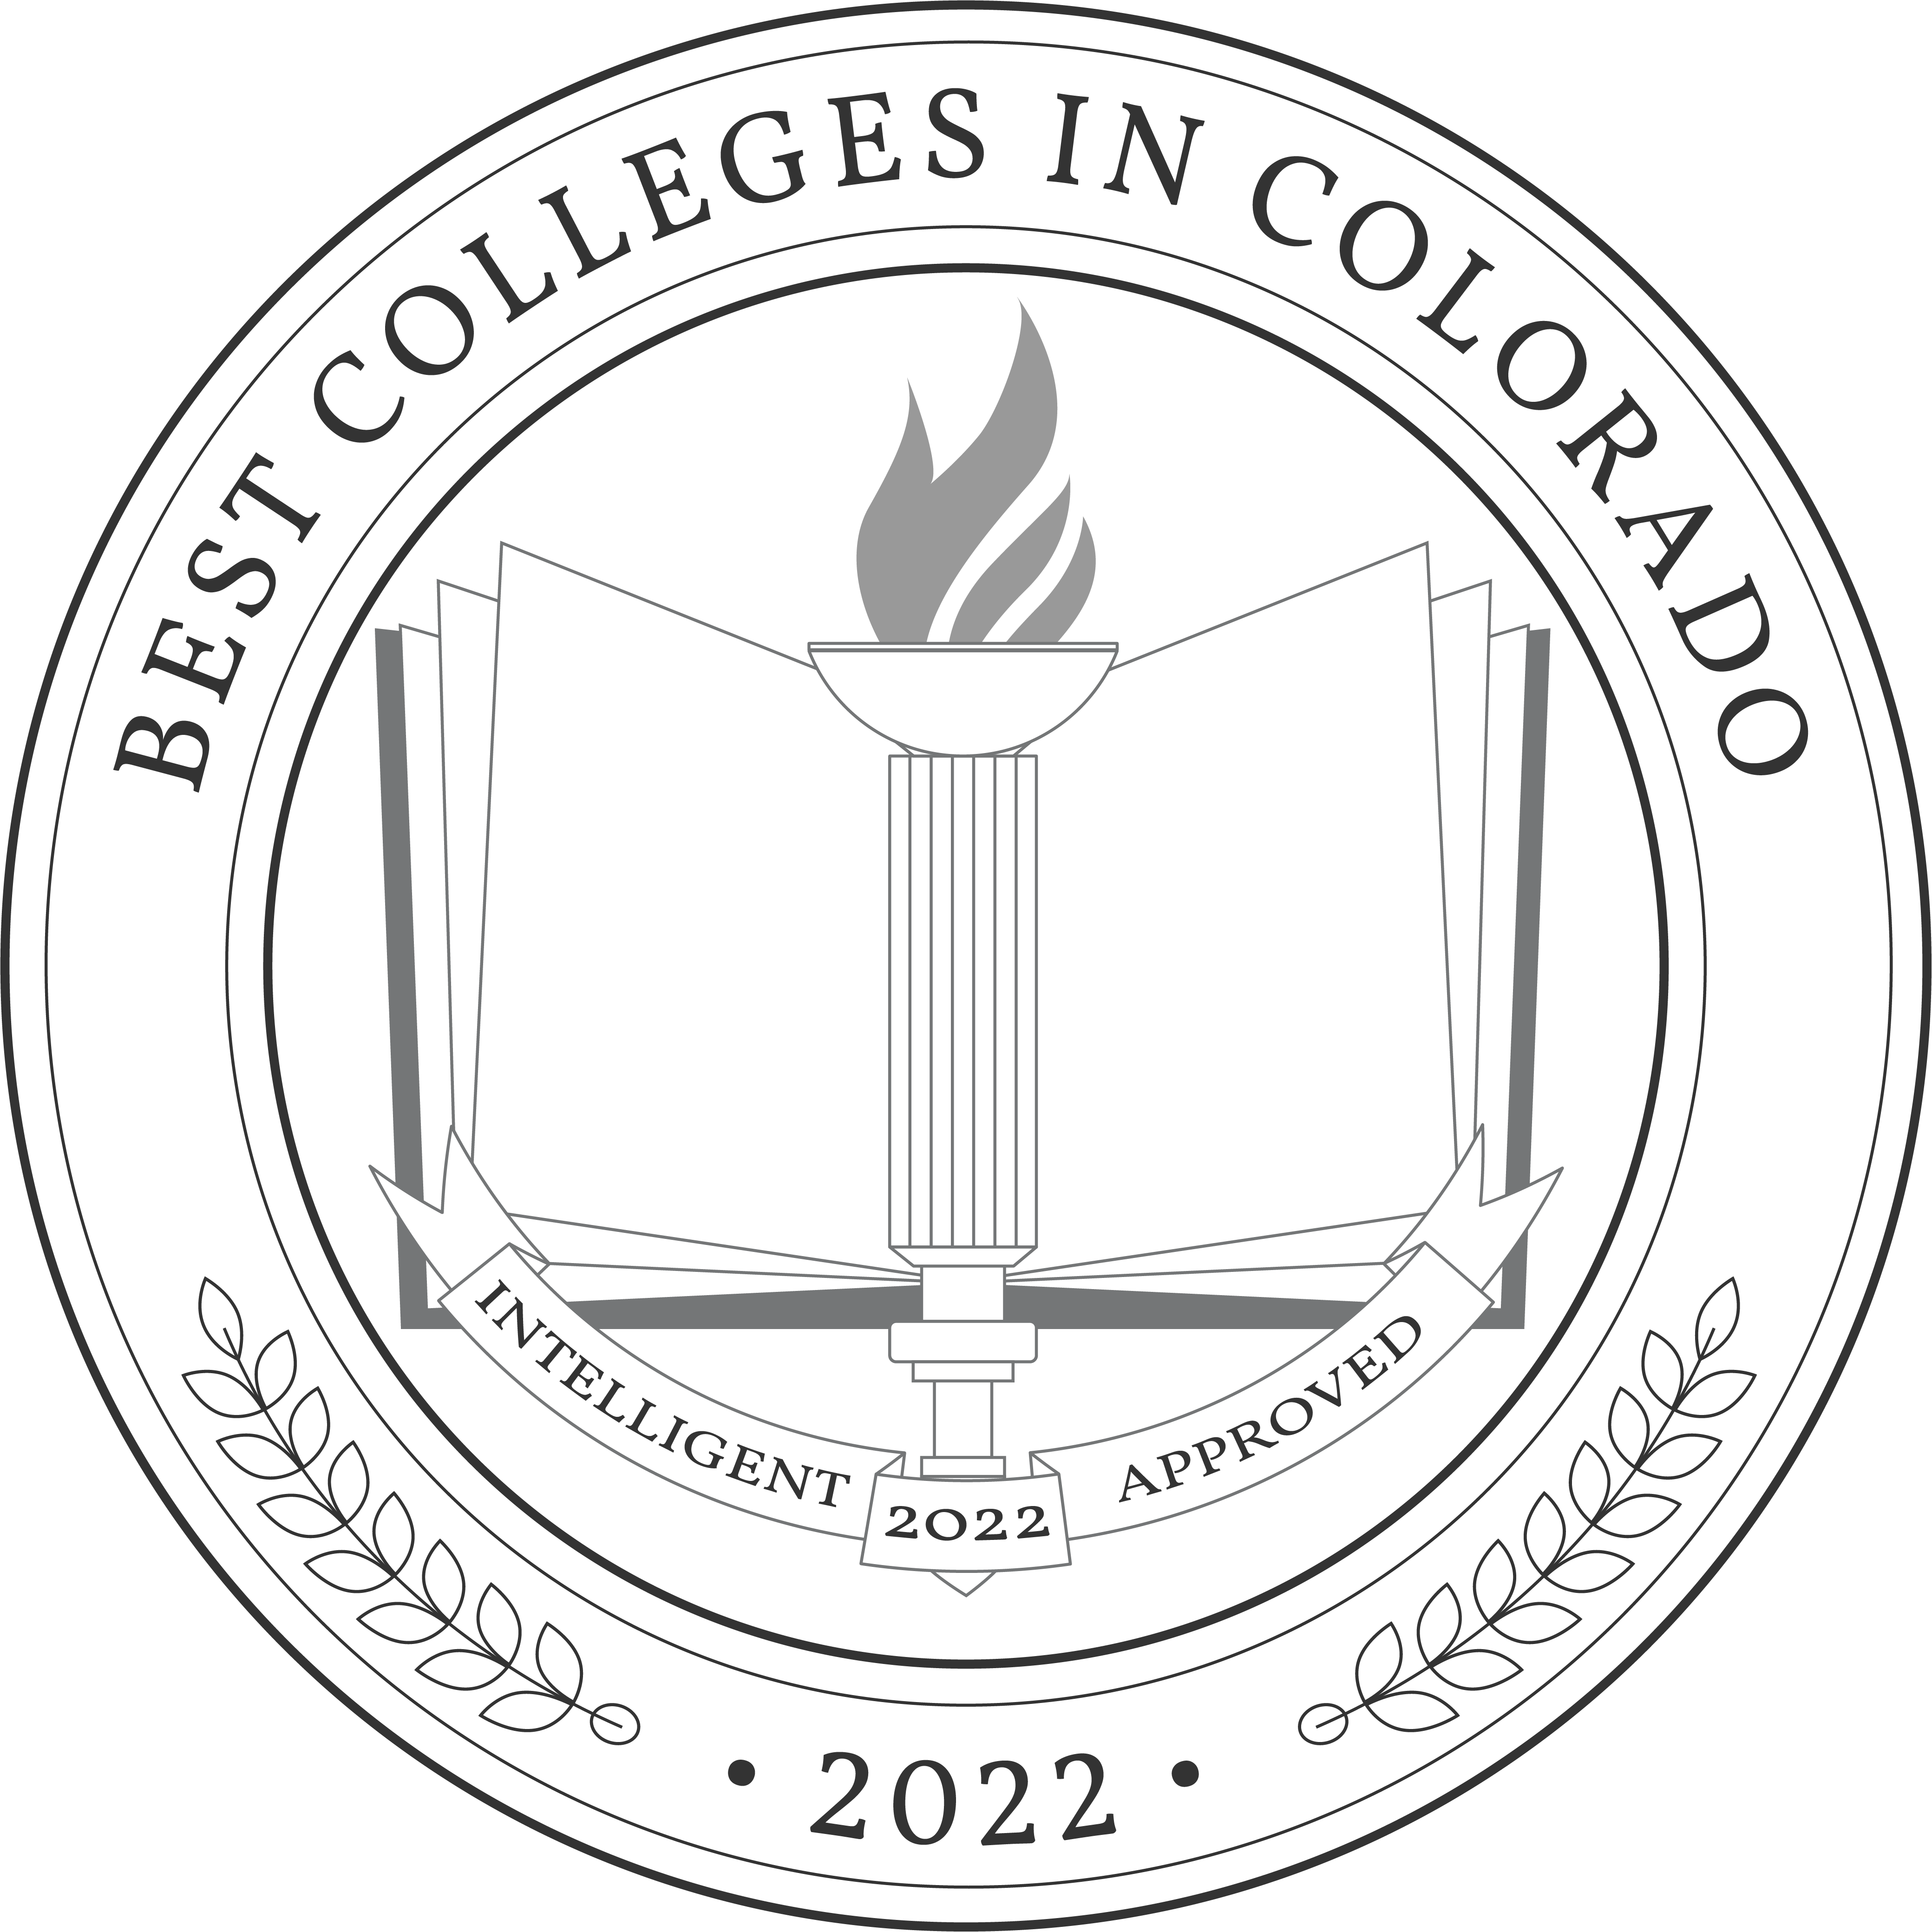 Best Colleges In Colorado